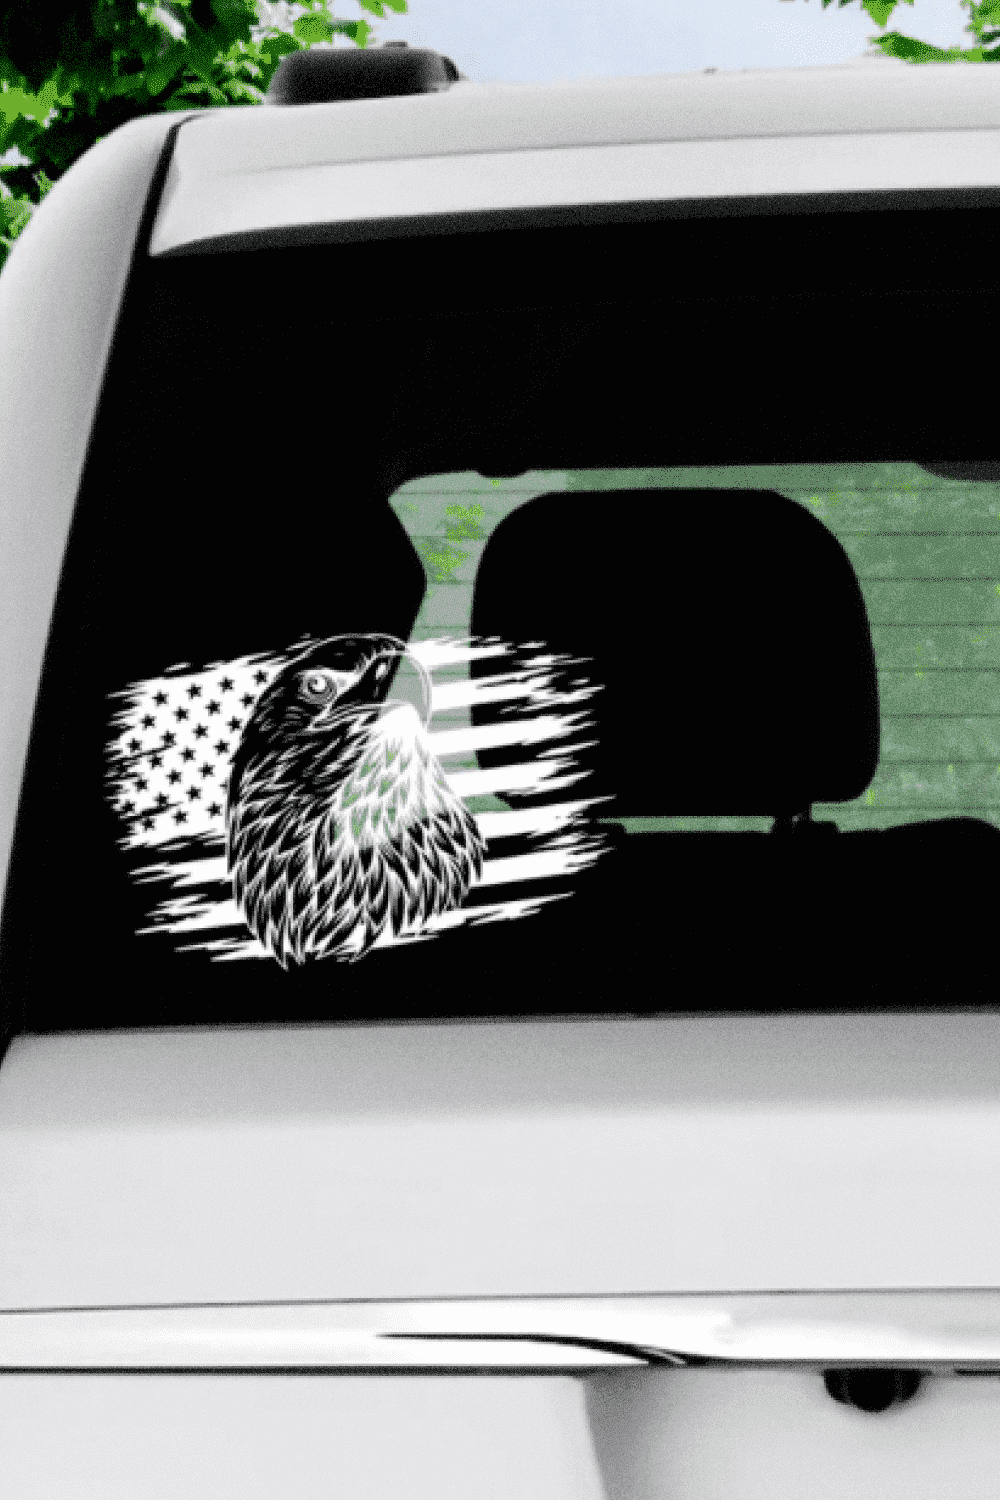 Eagle Through Flag - SVG Bundle - Print On The Rear Window Of The Car. 